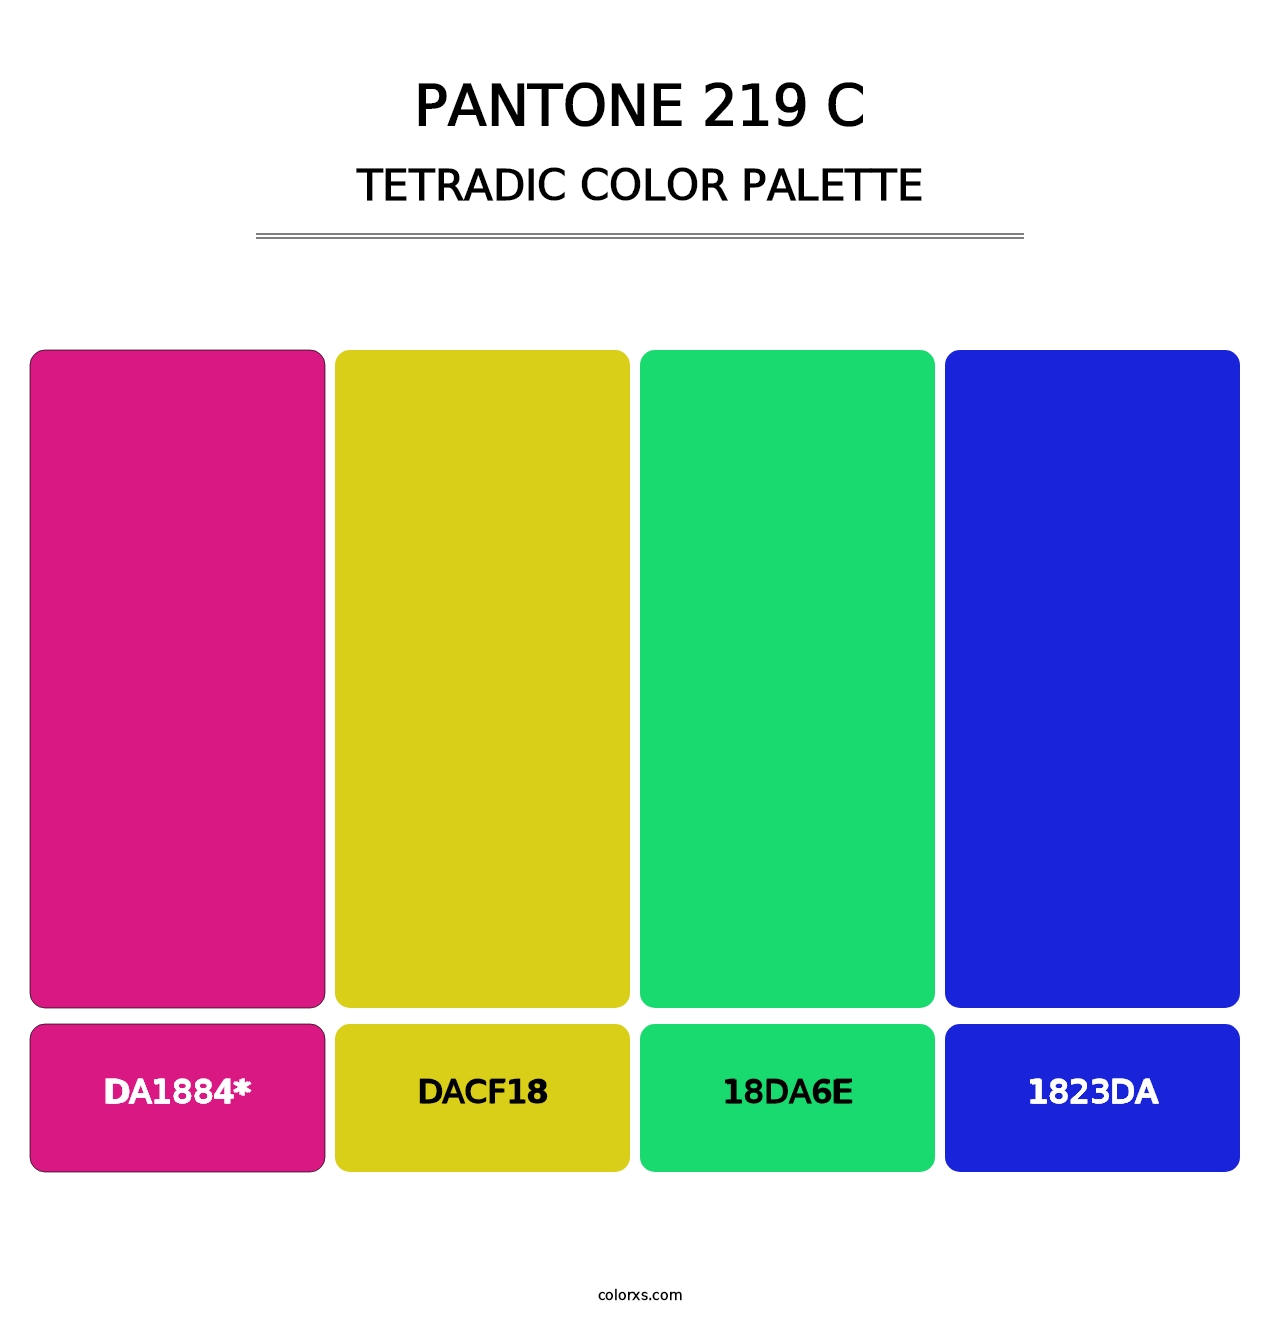 PANTONE 219 C - Tetradic Color Palette